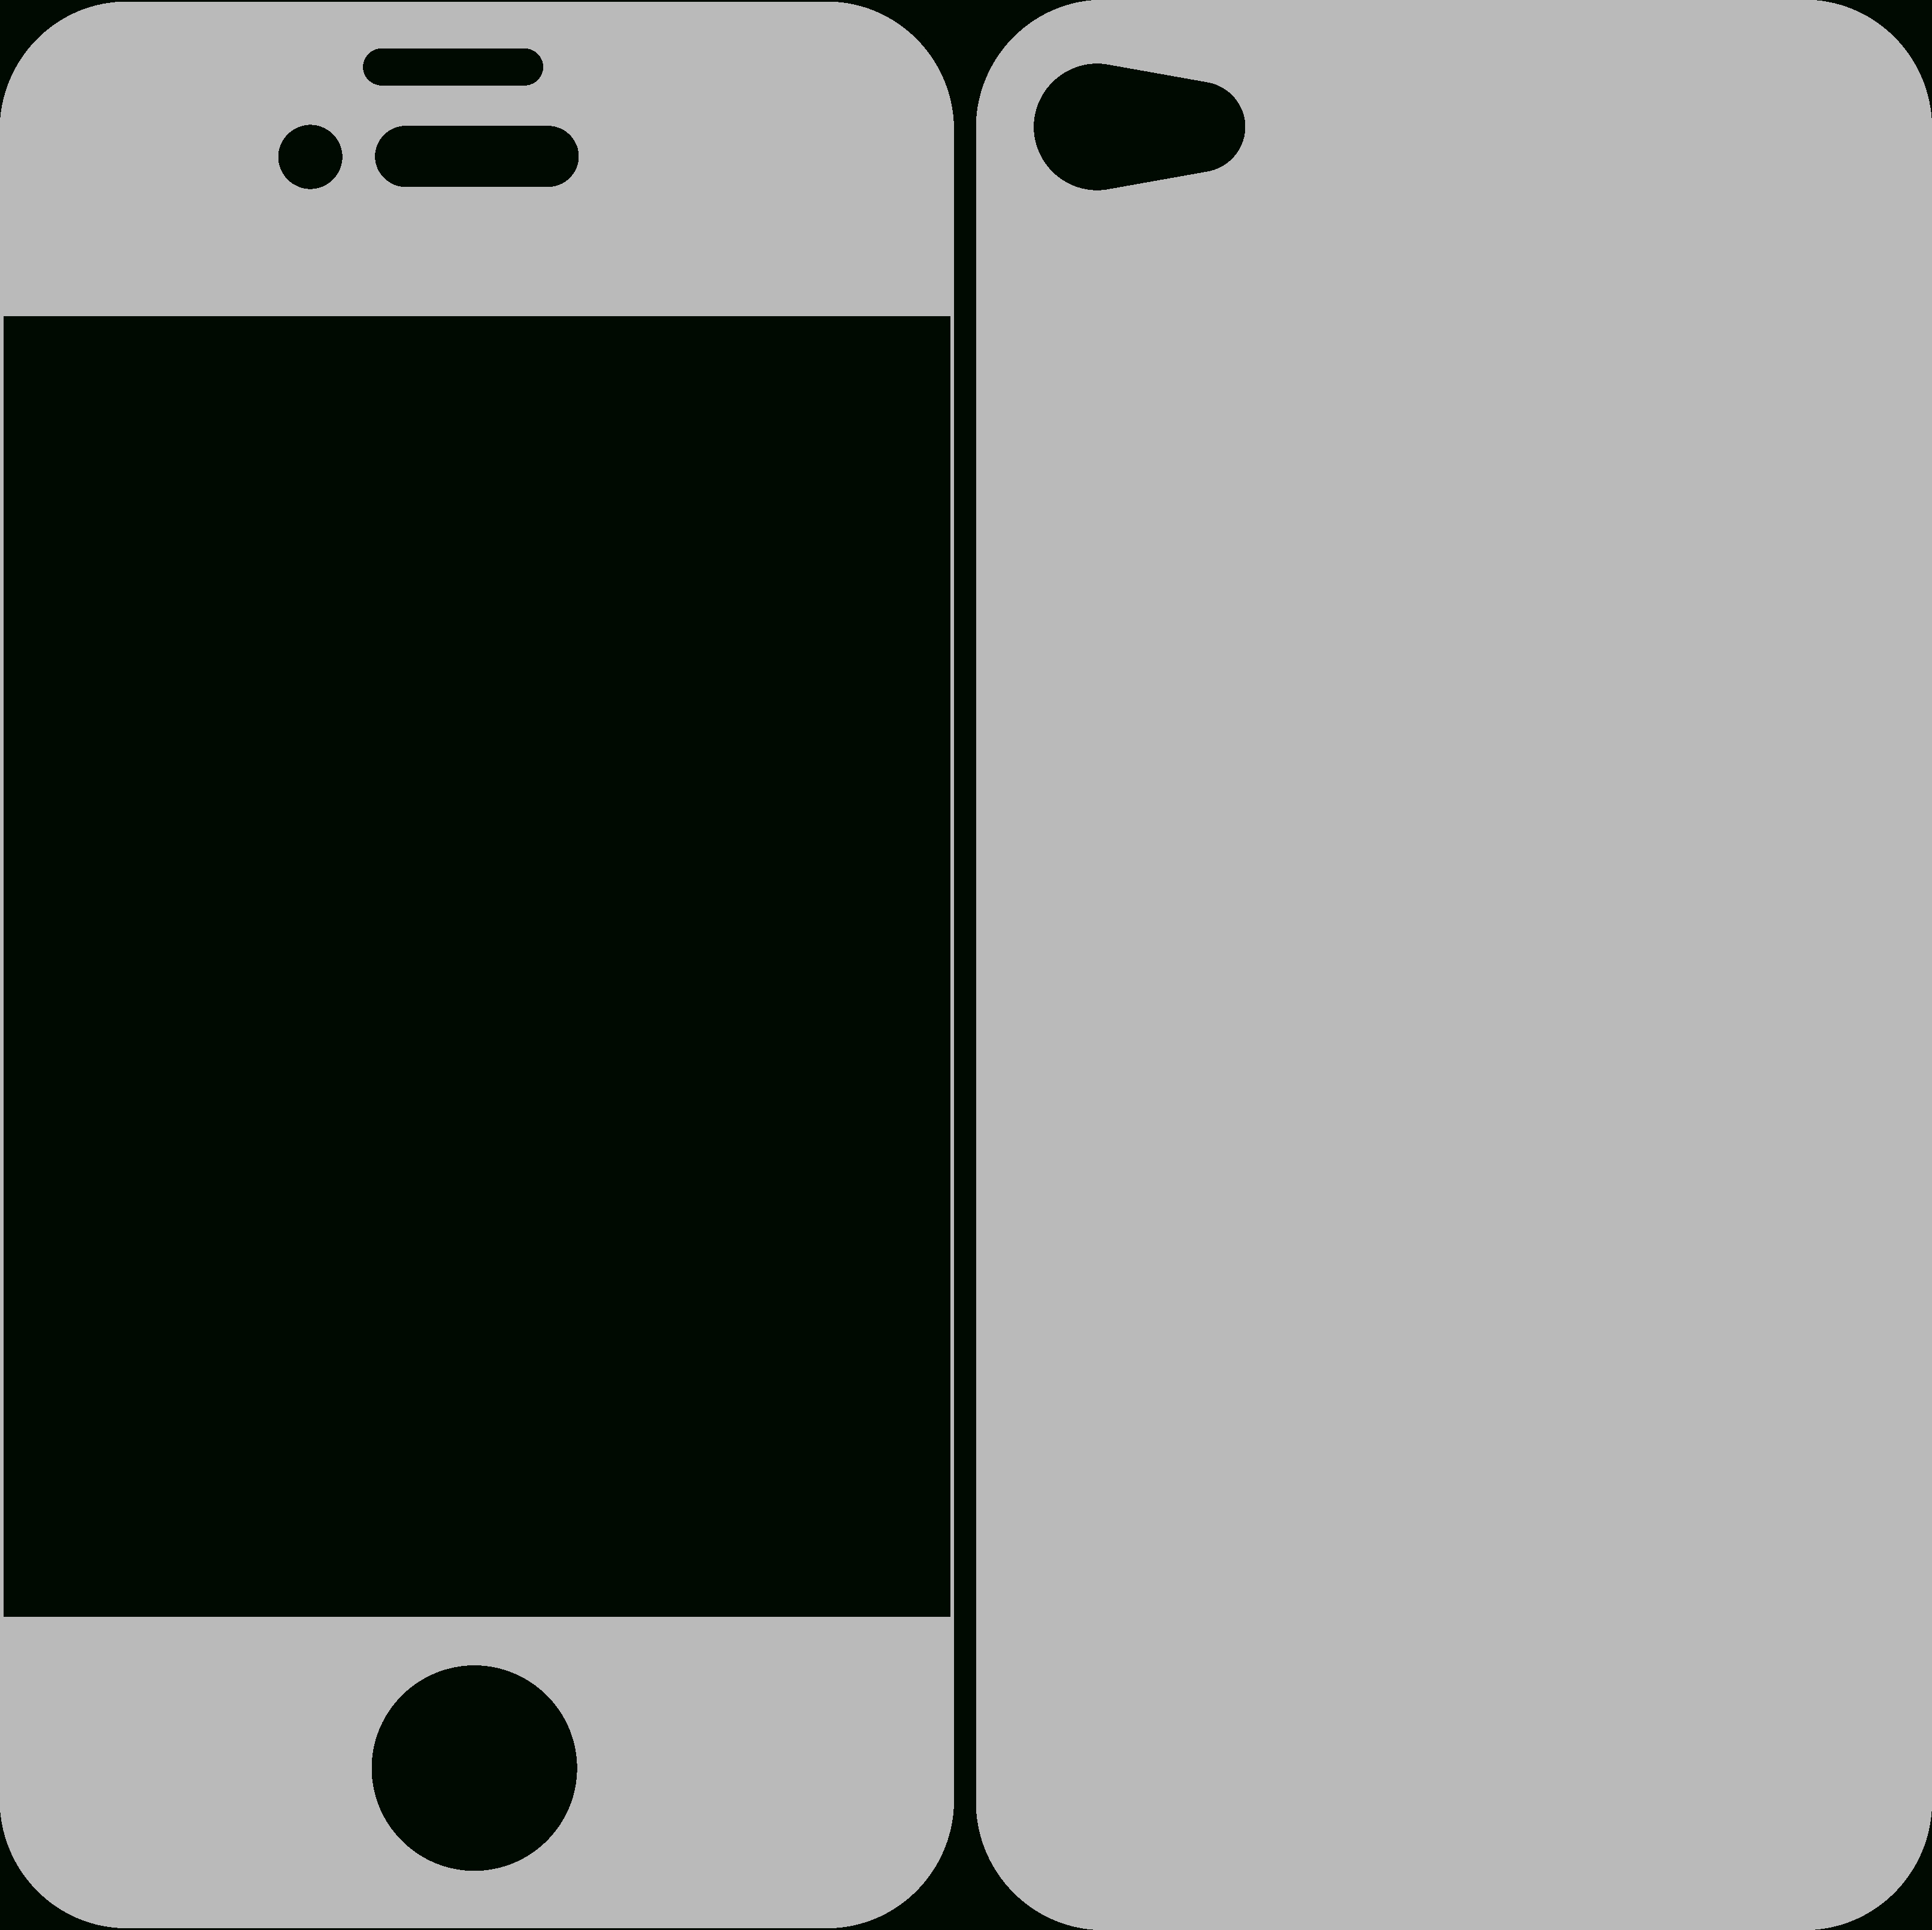 Free Iphone 6 Skin Template - Free Printable Iphone Skins